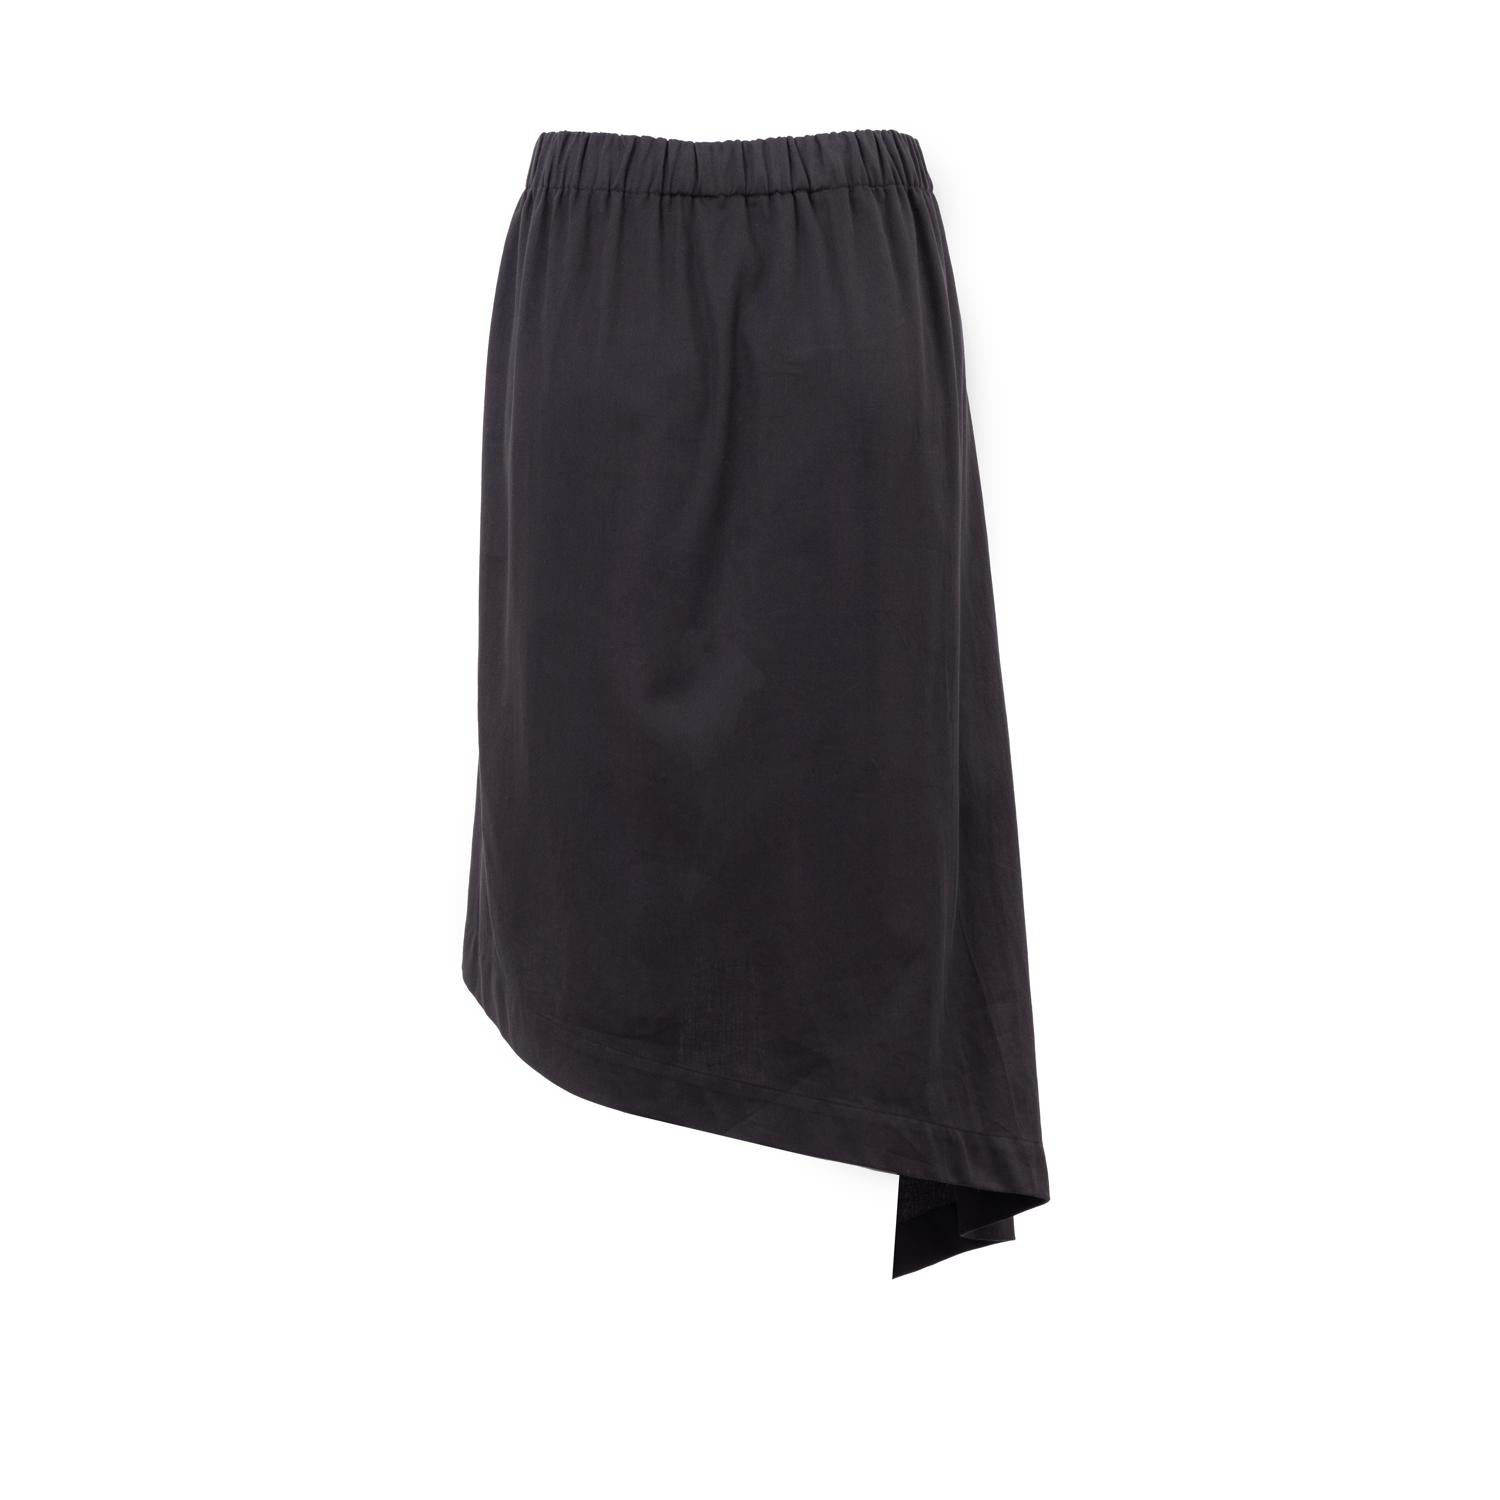 Asymmetrical skirt in black made of organic cotton